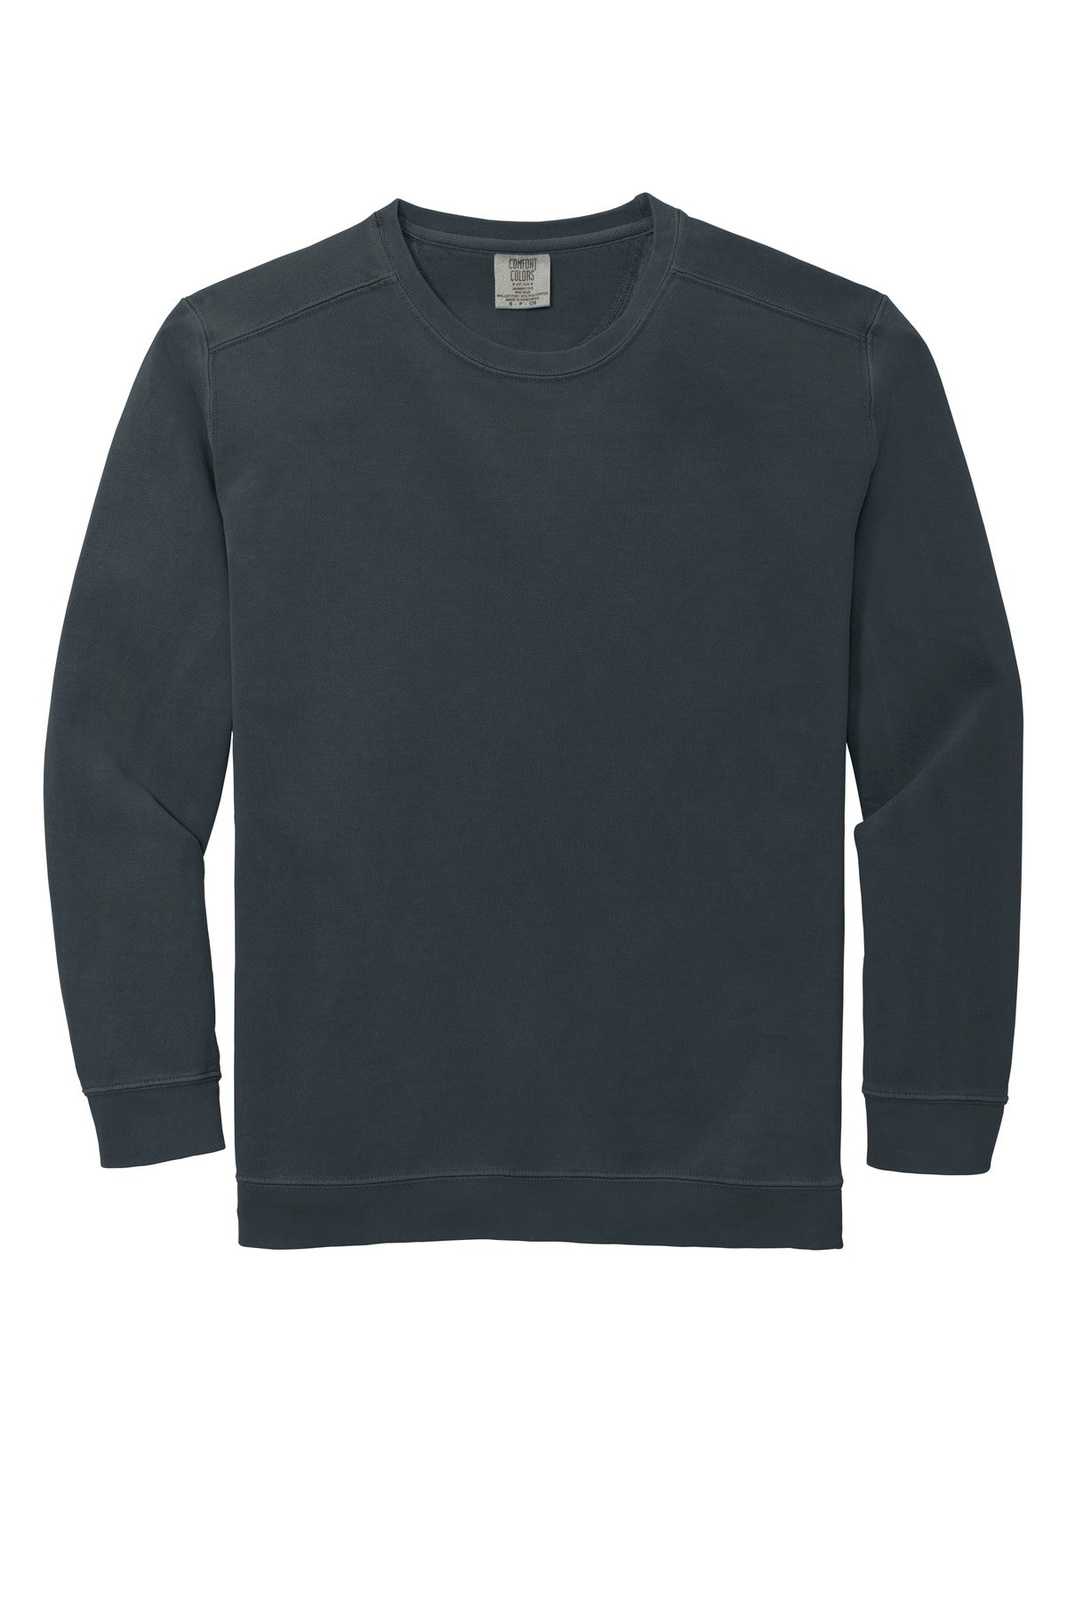 Comfort Colors 1566 Ring Spun Crewneck Sweatshirt - Denim - HIT a Double